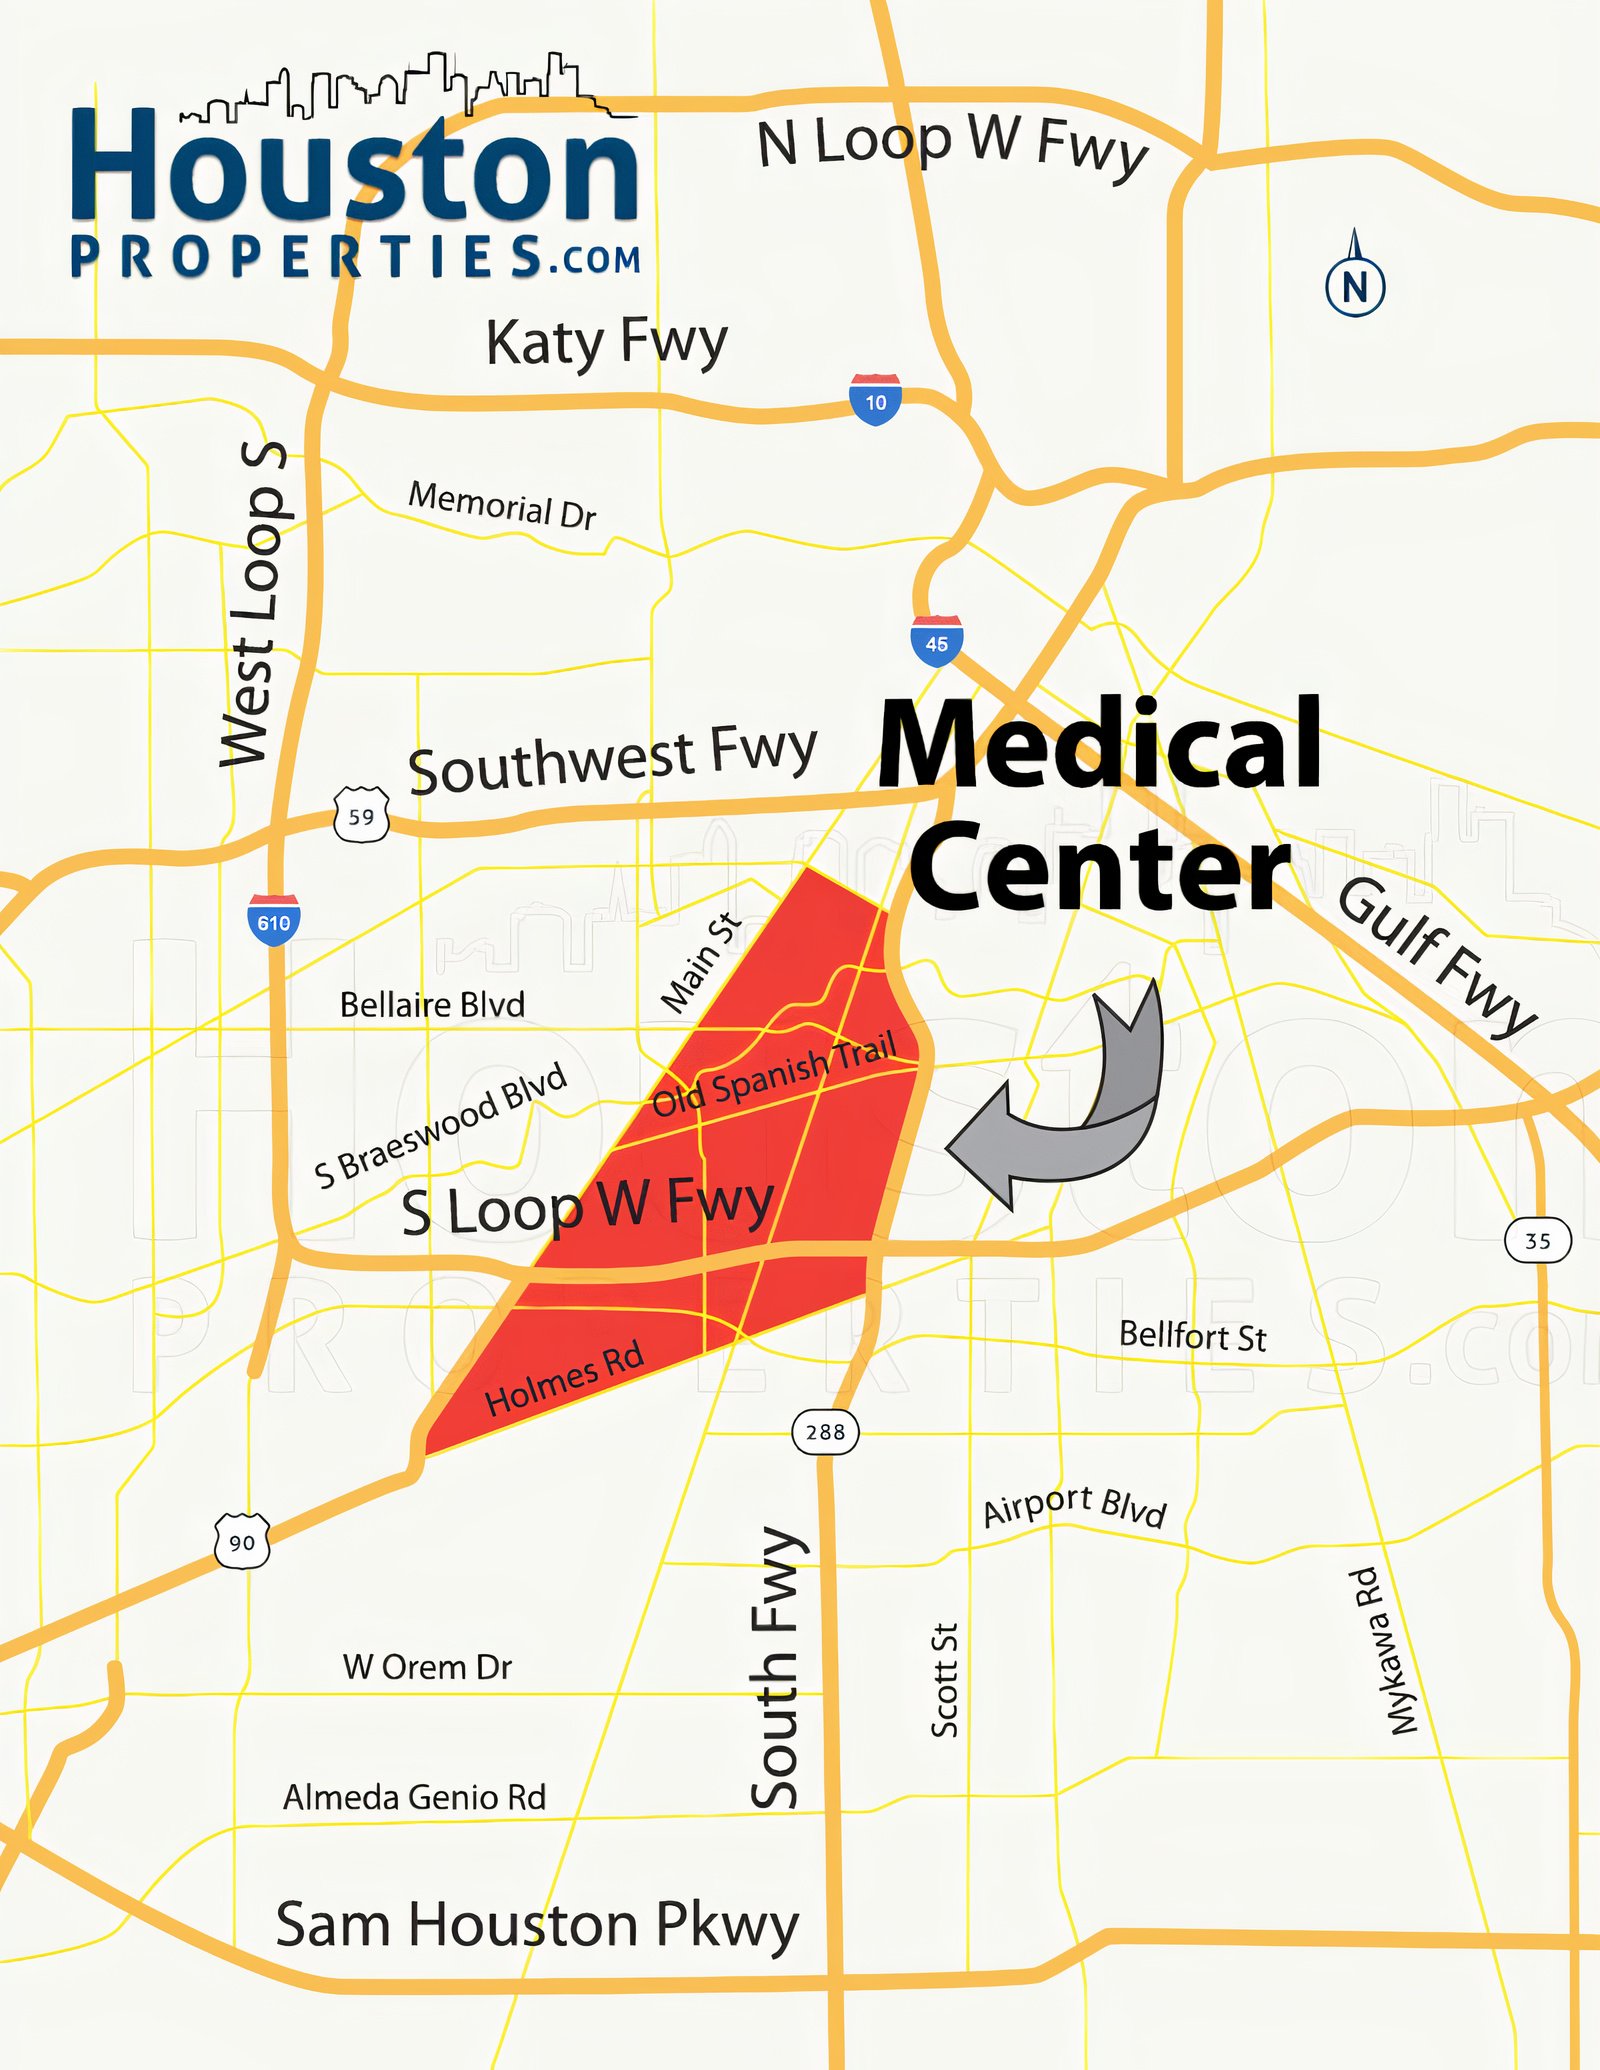 Medical Center Map